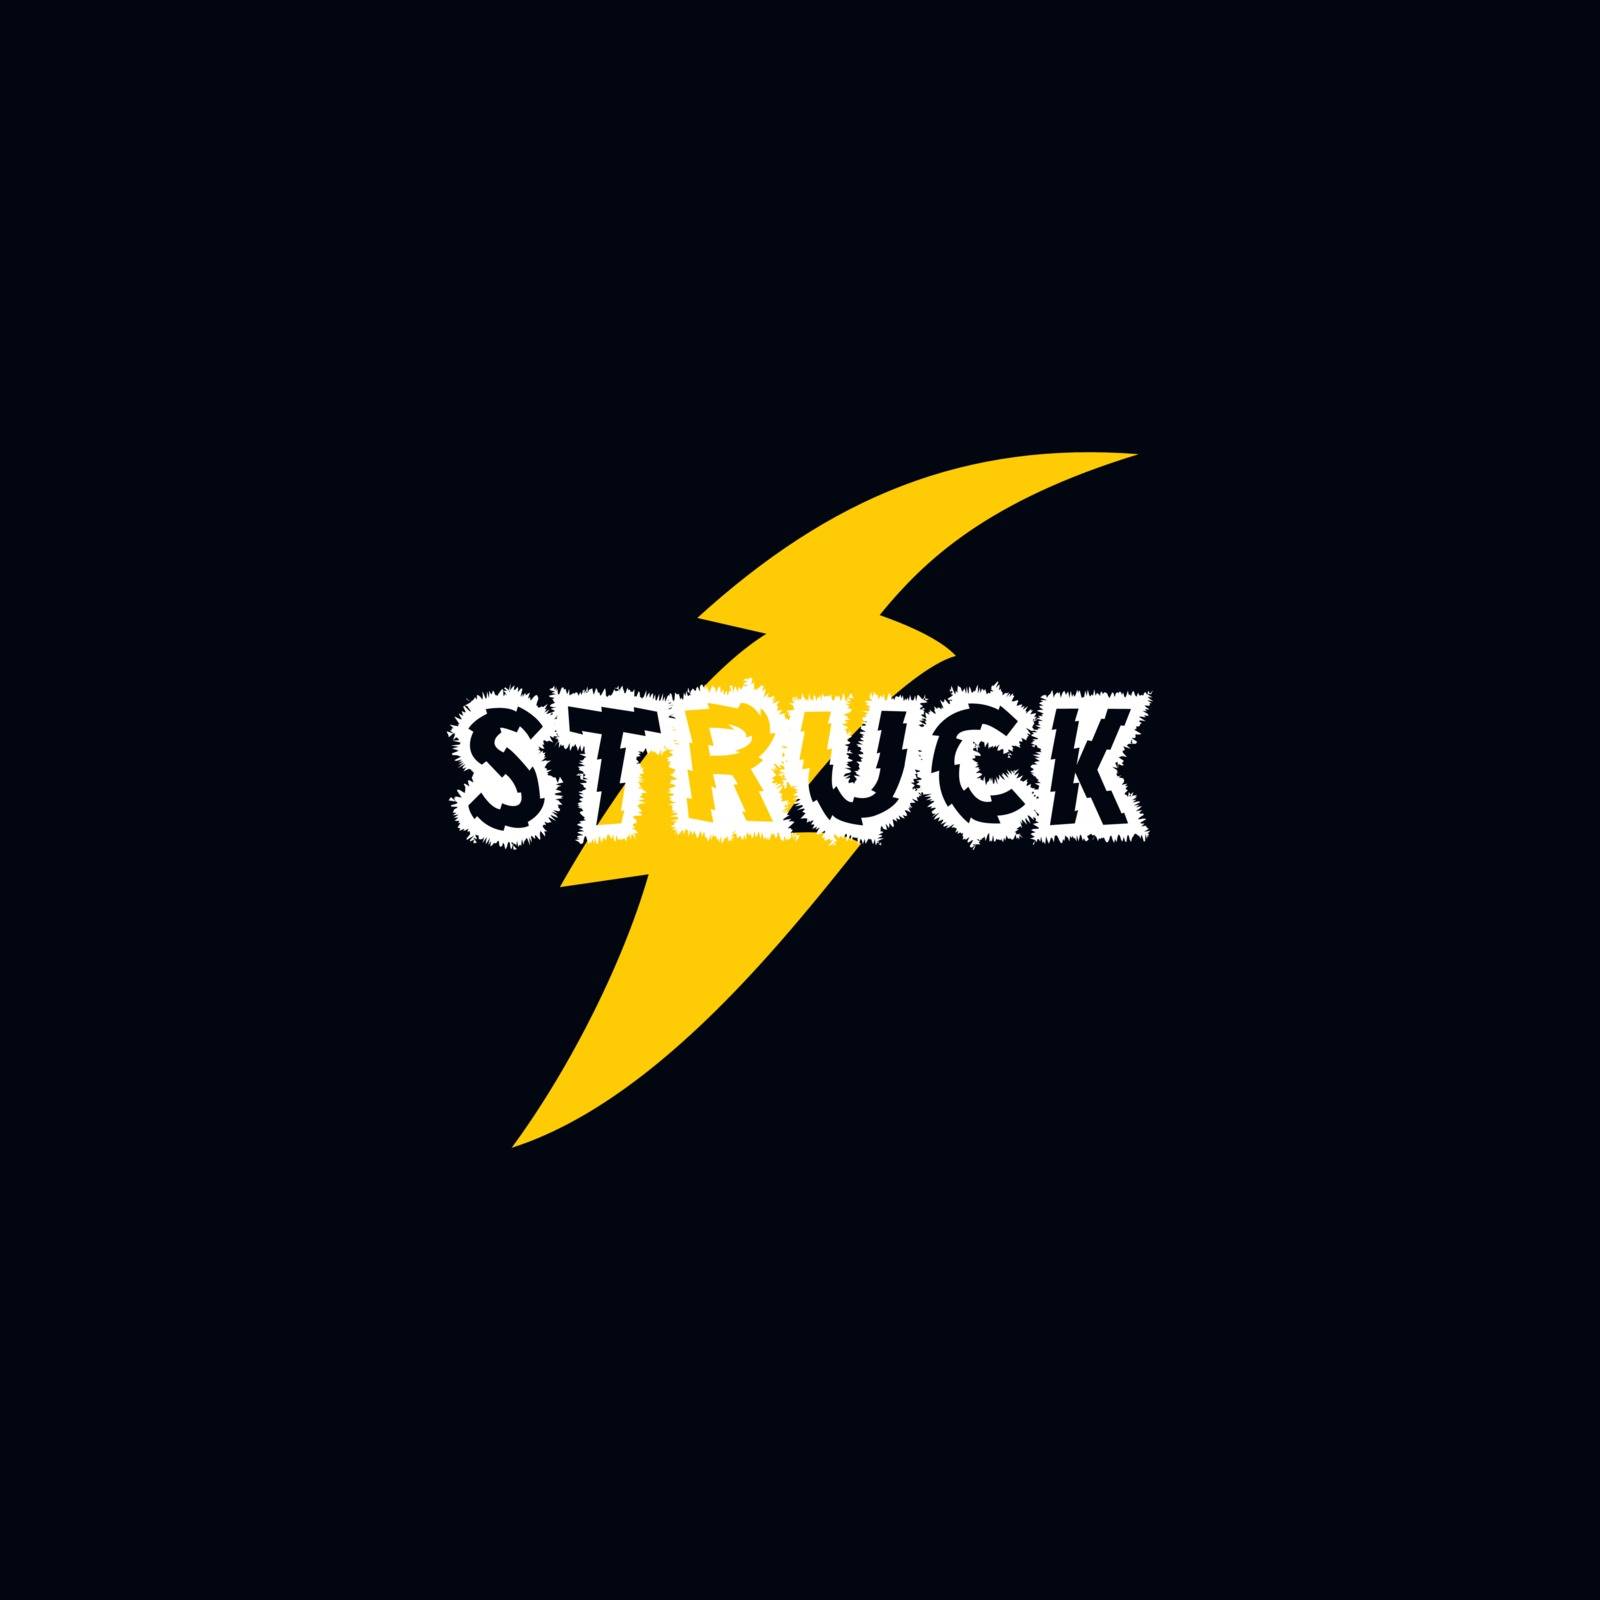 flash thunder bolt logo theme vector art illustration